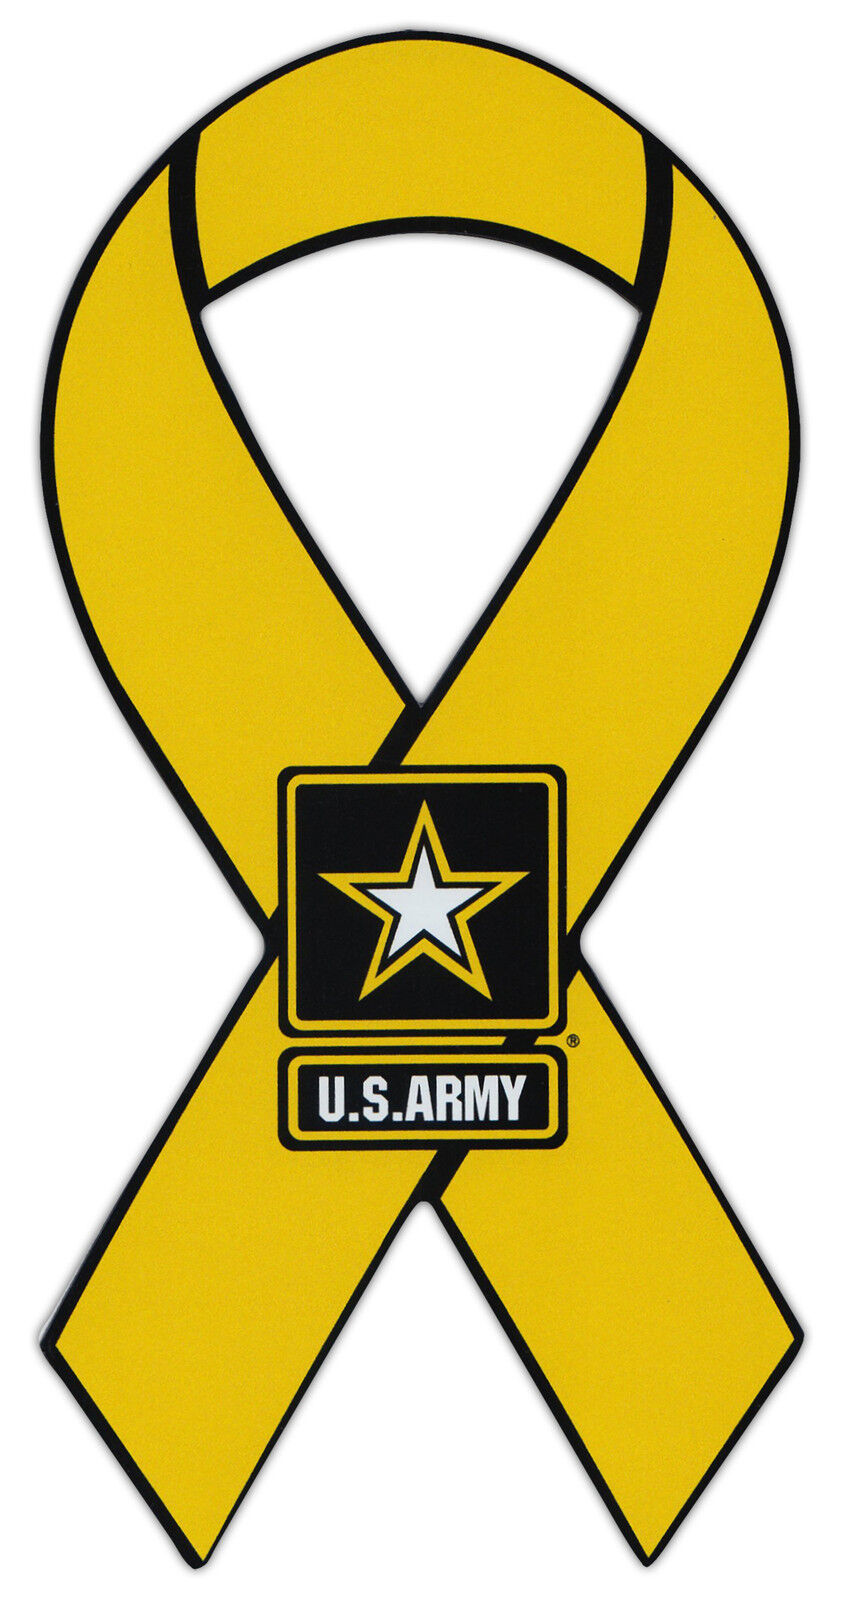 Ribbon Magnet - US Army Yellow Ribbon Military - Cars, Trucks, Refrigerator